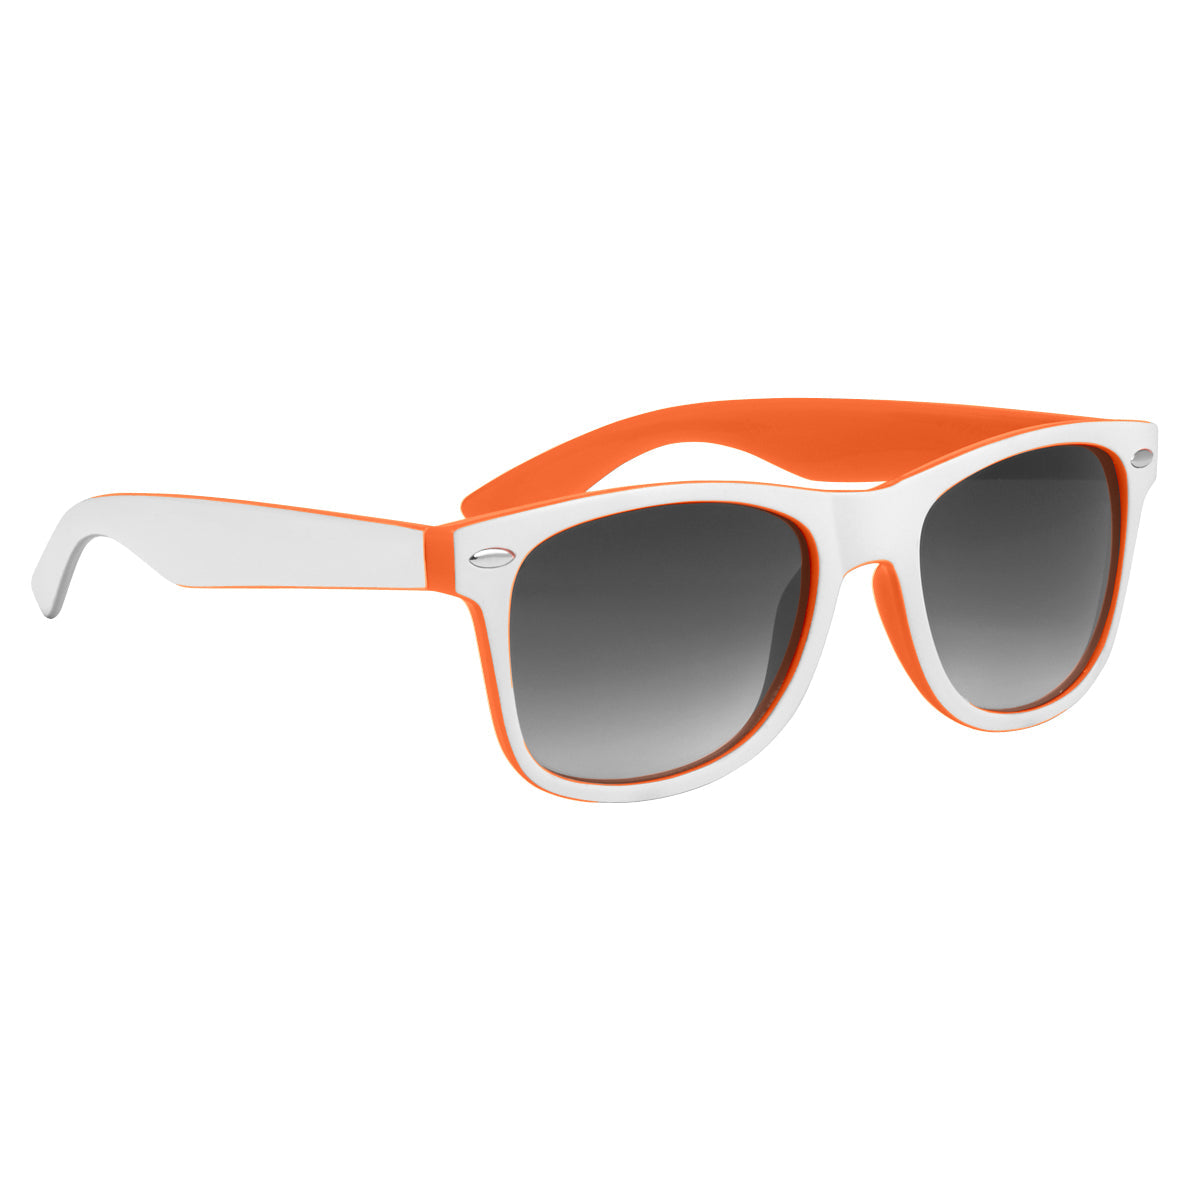 Two-Tone Malibu Sunglasses Sunglasses Hit Promo Orange & White Single Color 